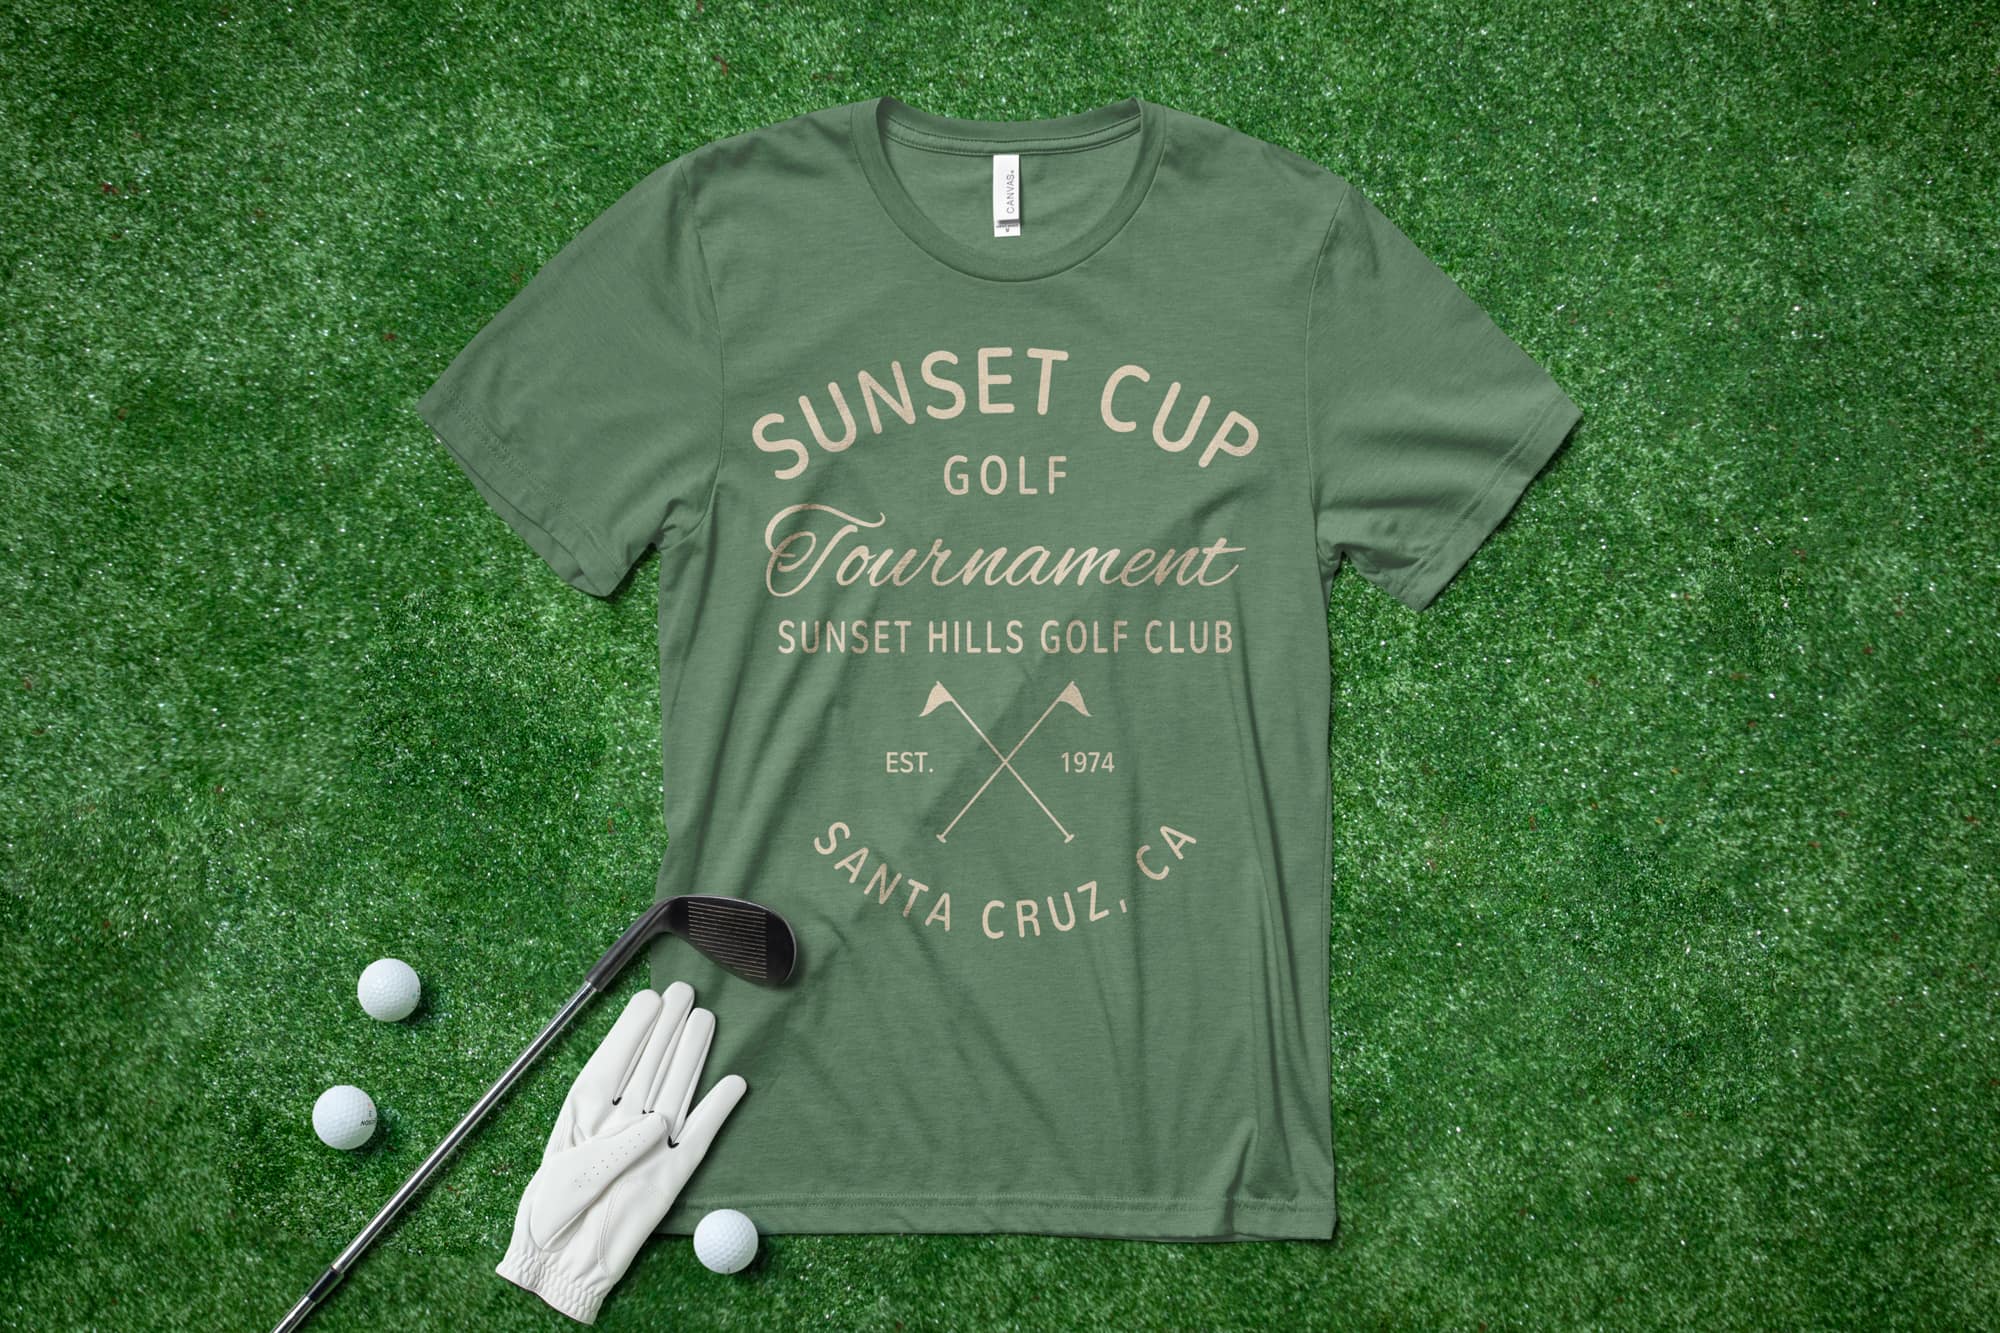 Flatlay on grass of a custom golf t-shirt with a minimalist design